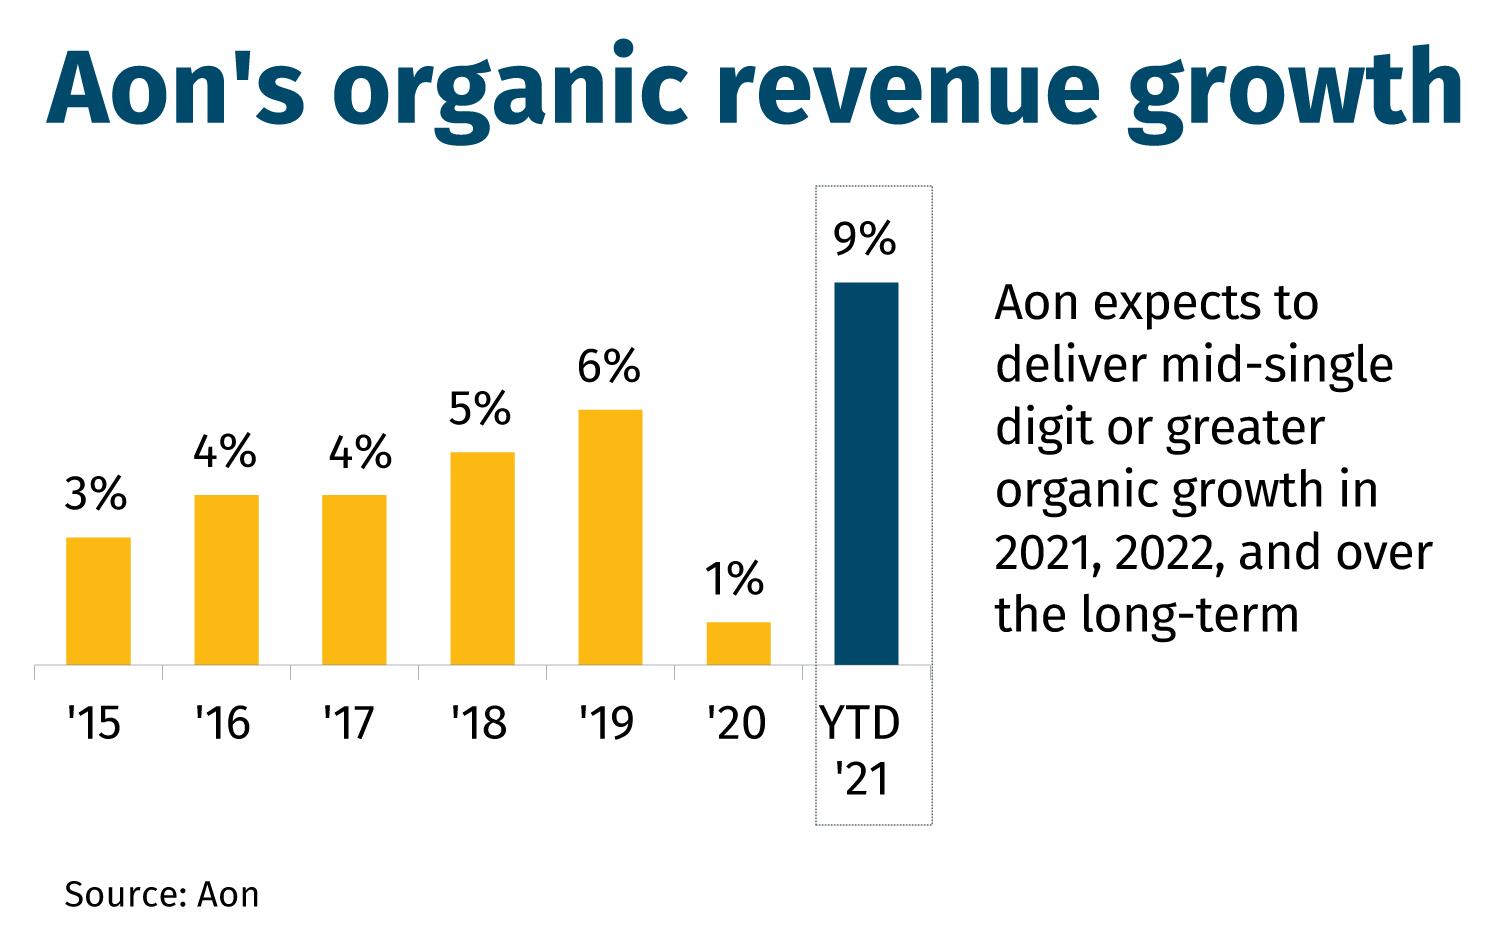 Aon's organic revenue growth